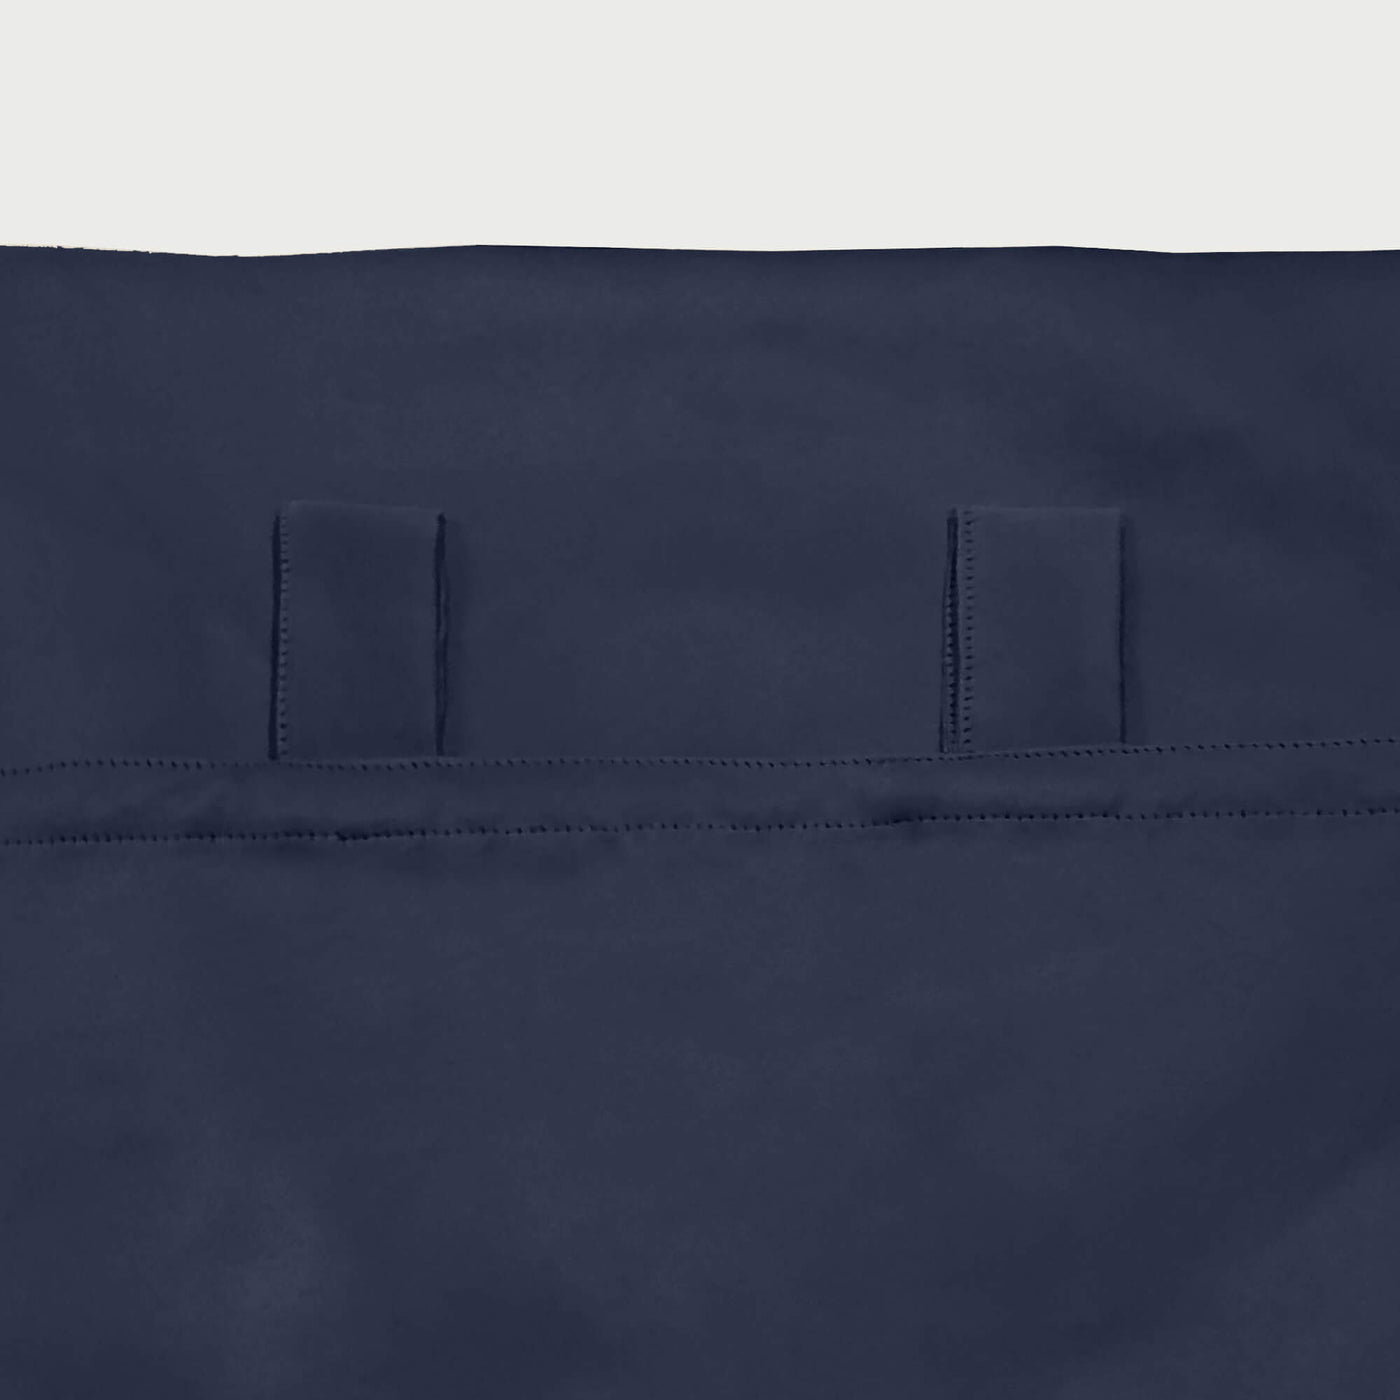 Outdoor Curtains Waterproof Tab Top 1 Panel - Prussian blue